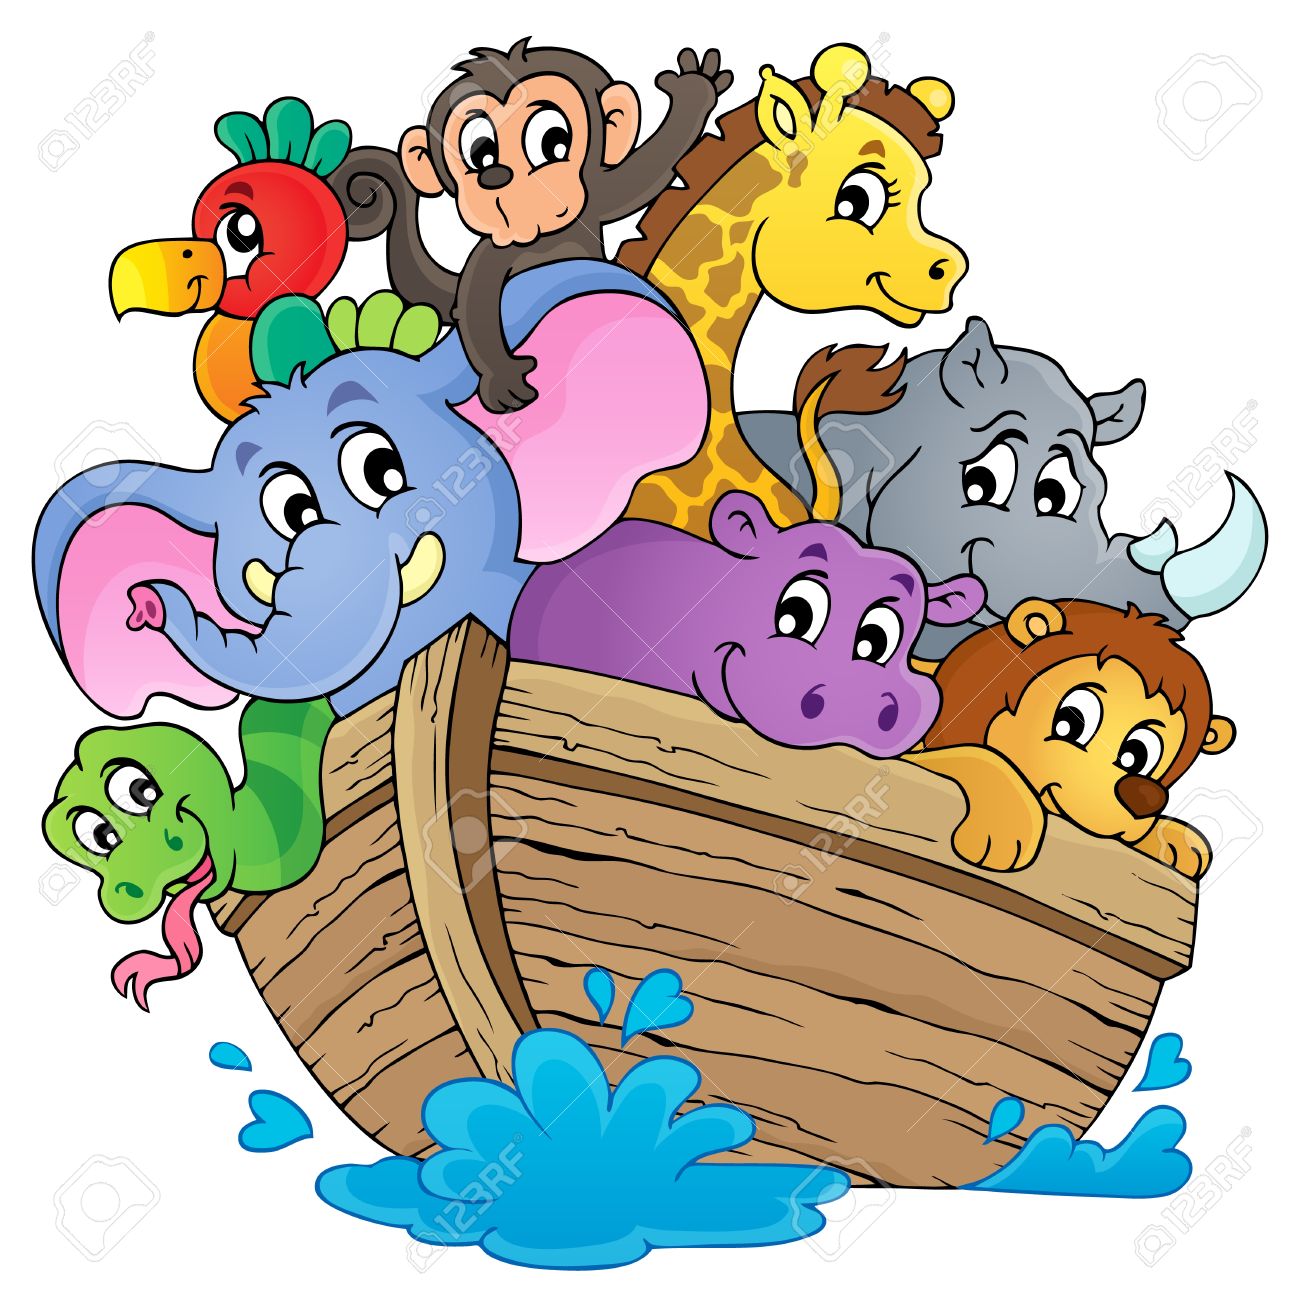 Noahs ark theme image Stock Vector - 28029388